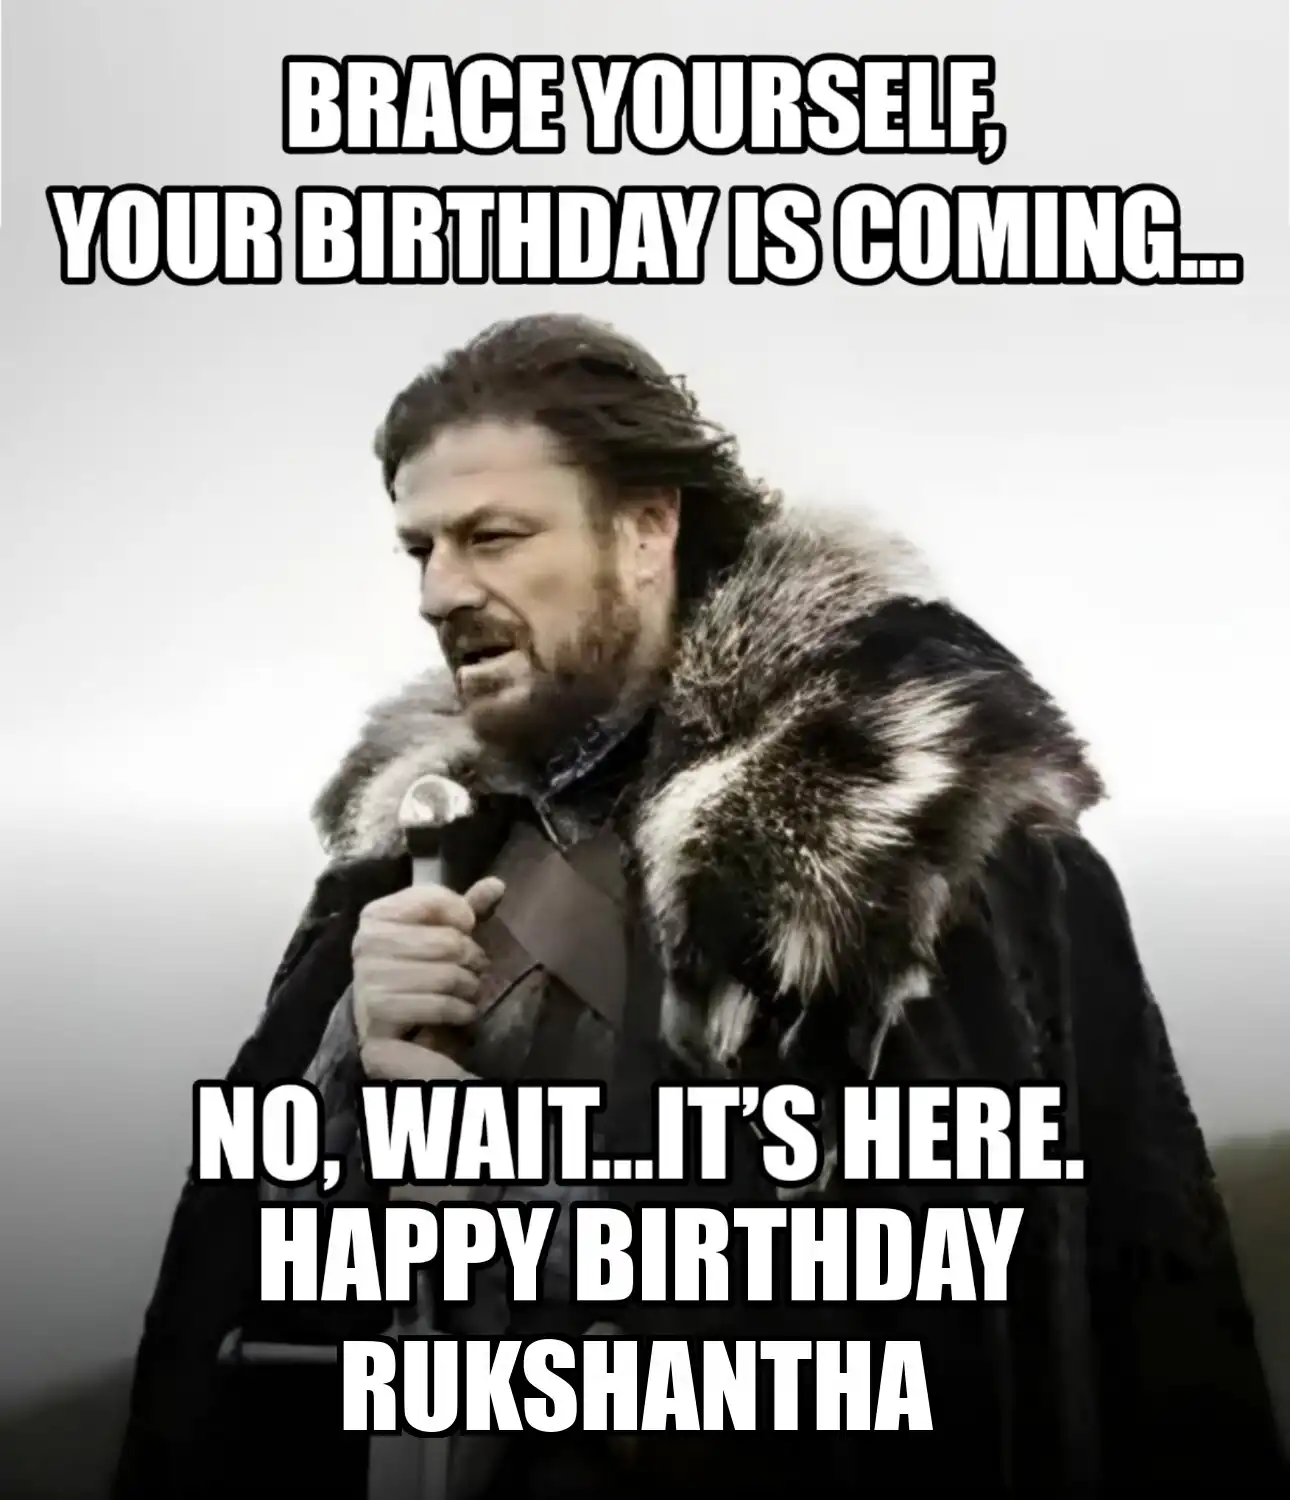 Happy Birthday Rukshantha Brace Yourself Your Birthday Is Coming Meme